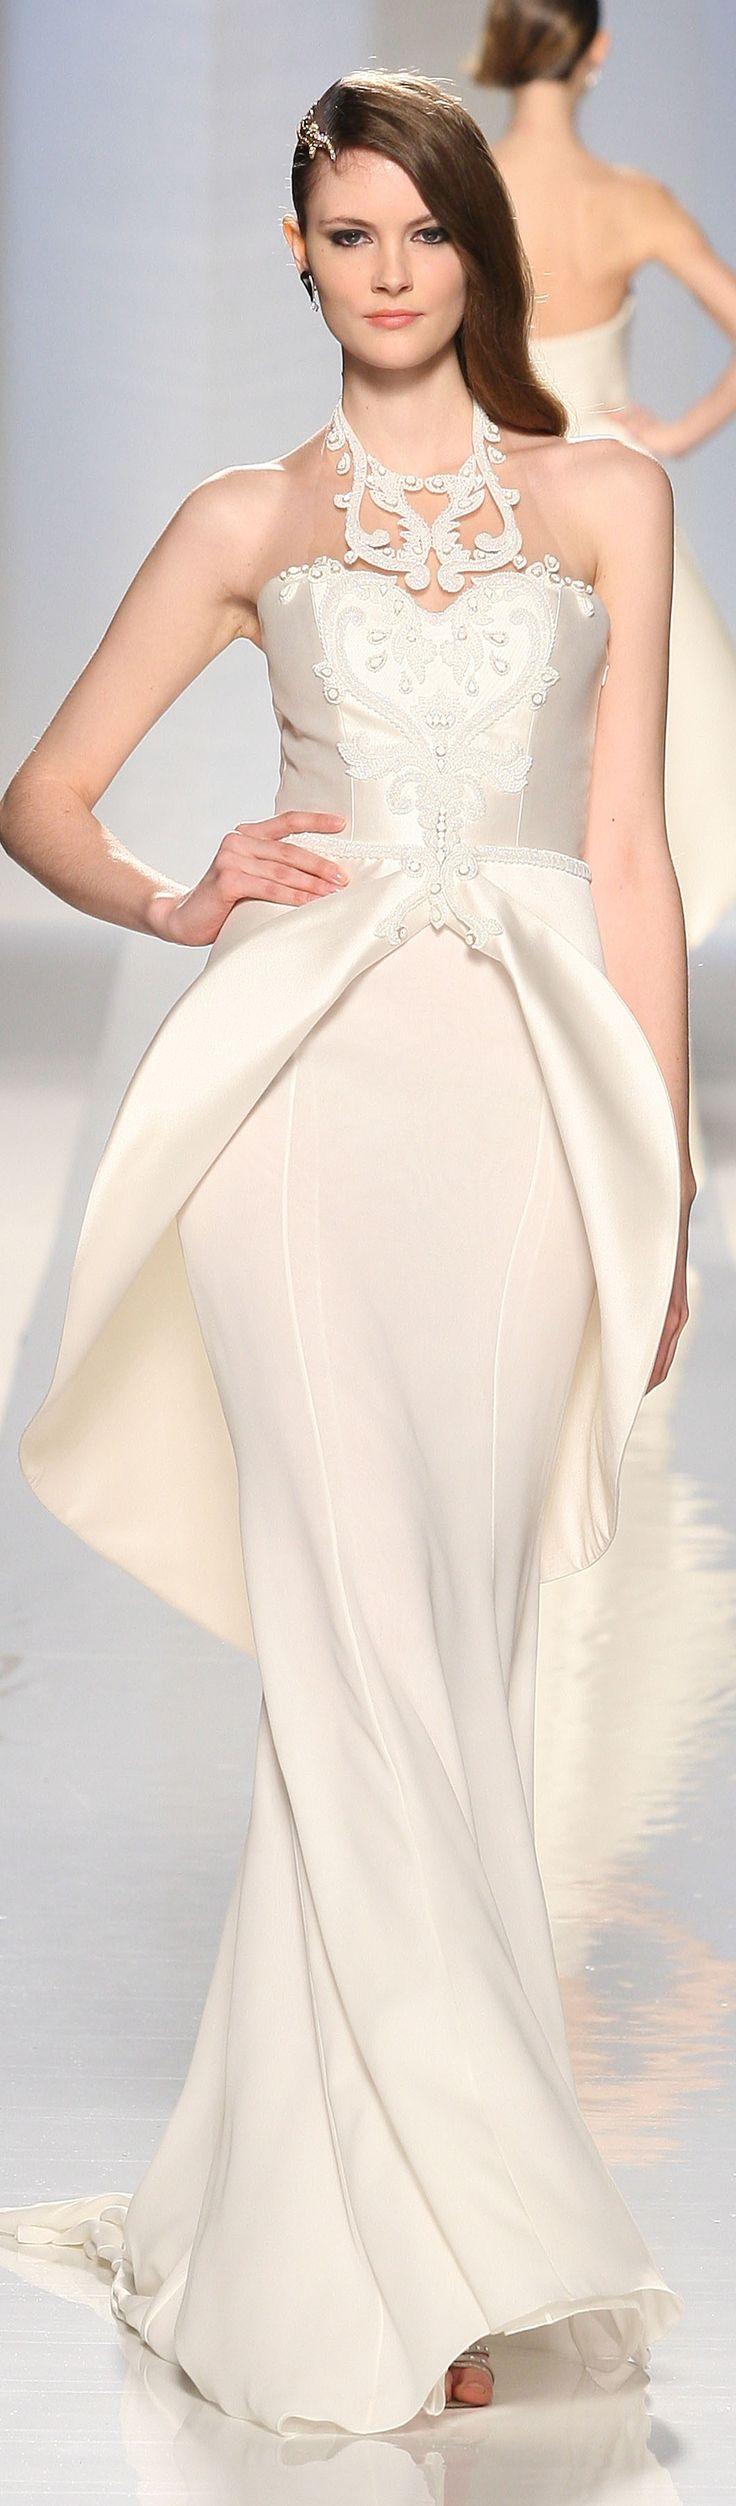 Dress - Fausto Sarli Haute Couture ~ #2070130 - Weddbook